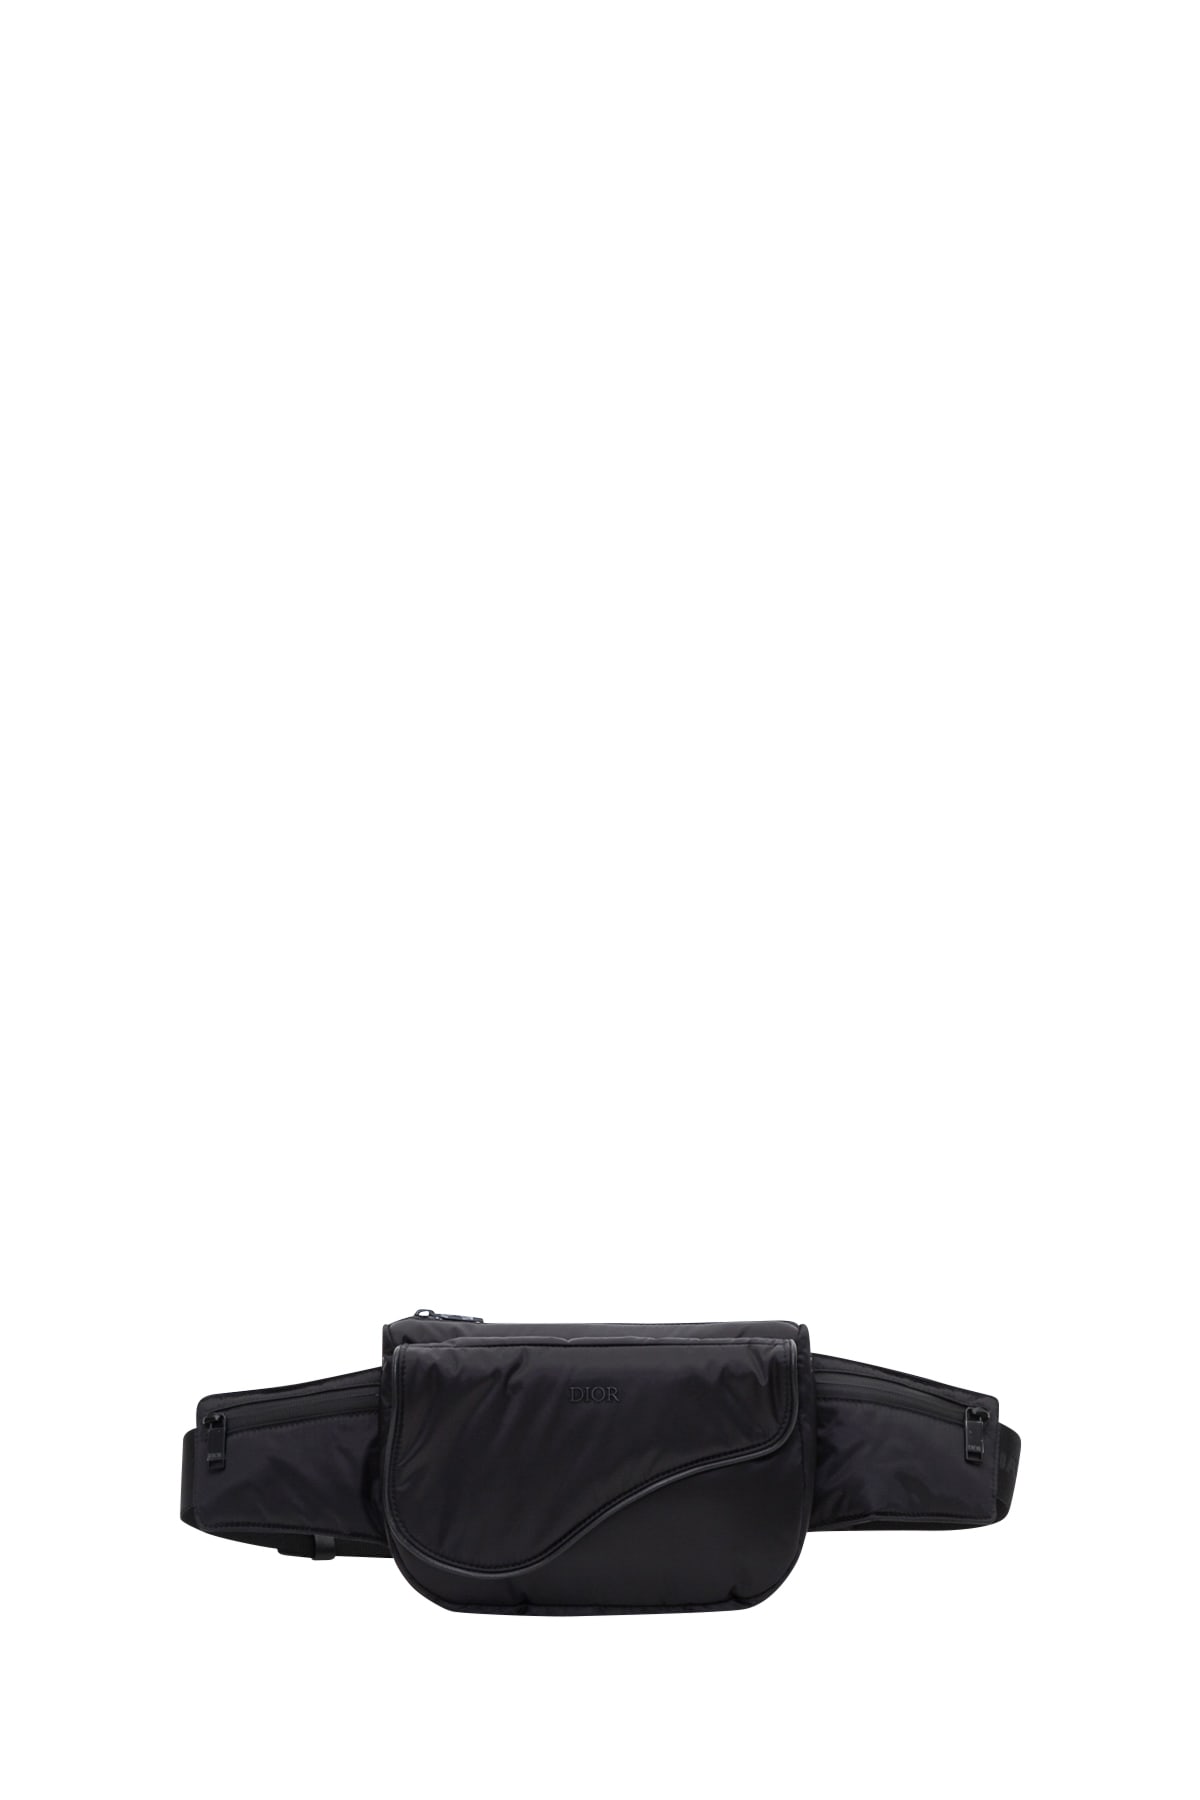 Dior Saddle Universe Belt Bag In Nero